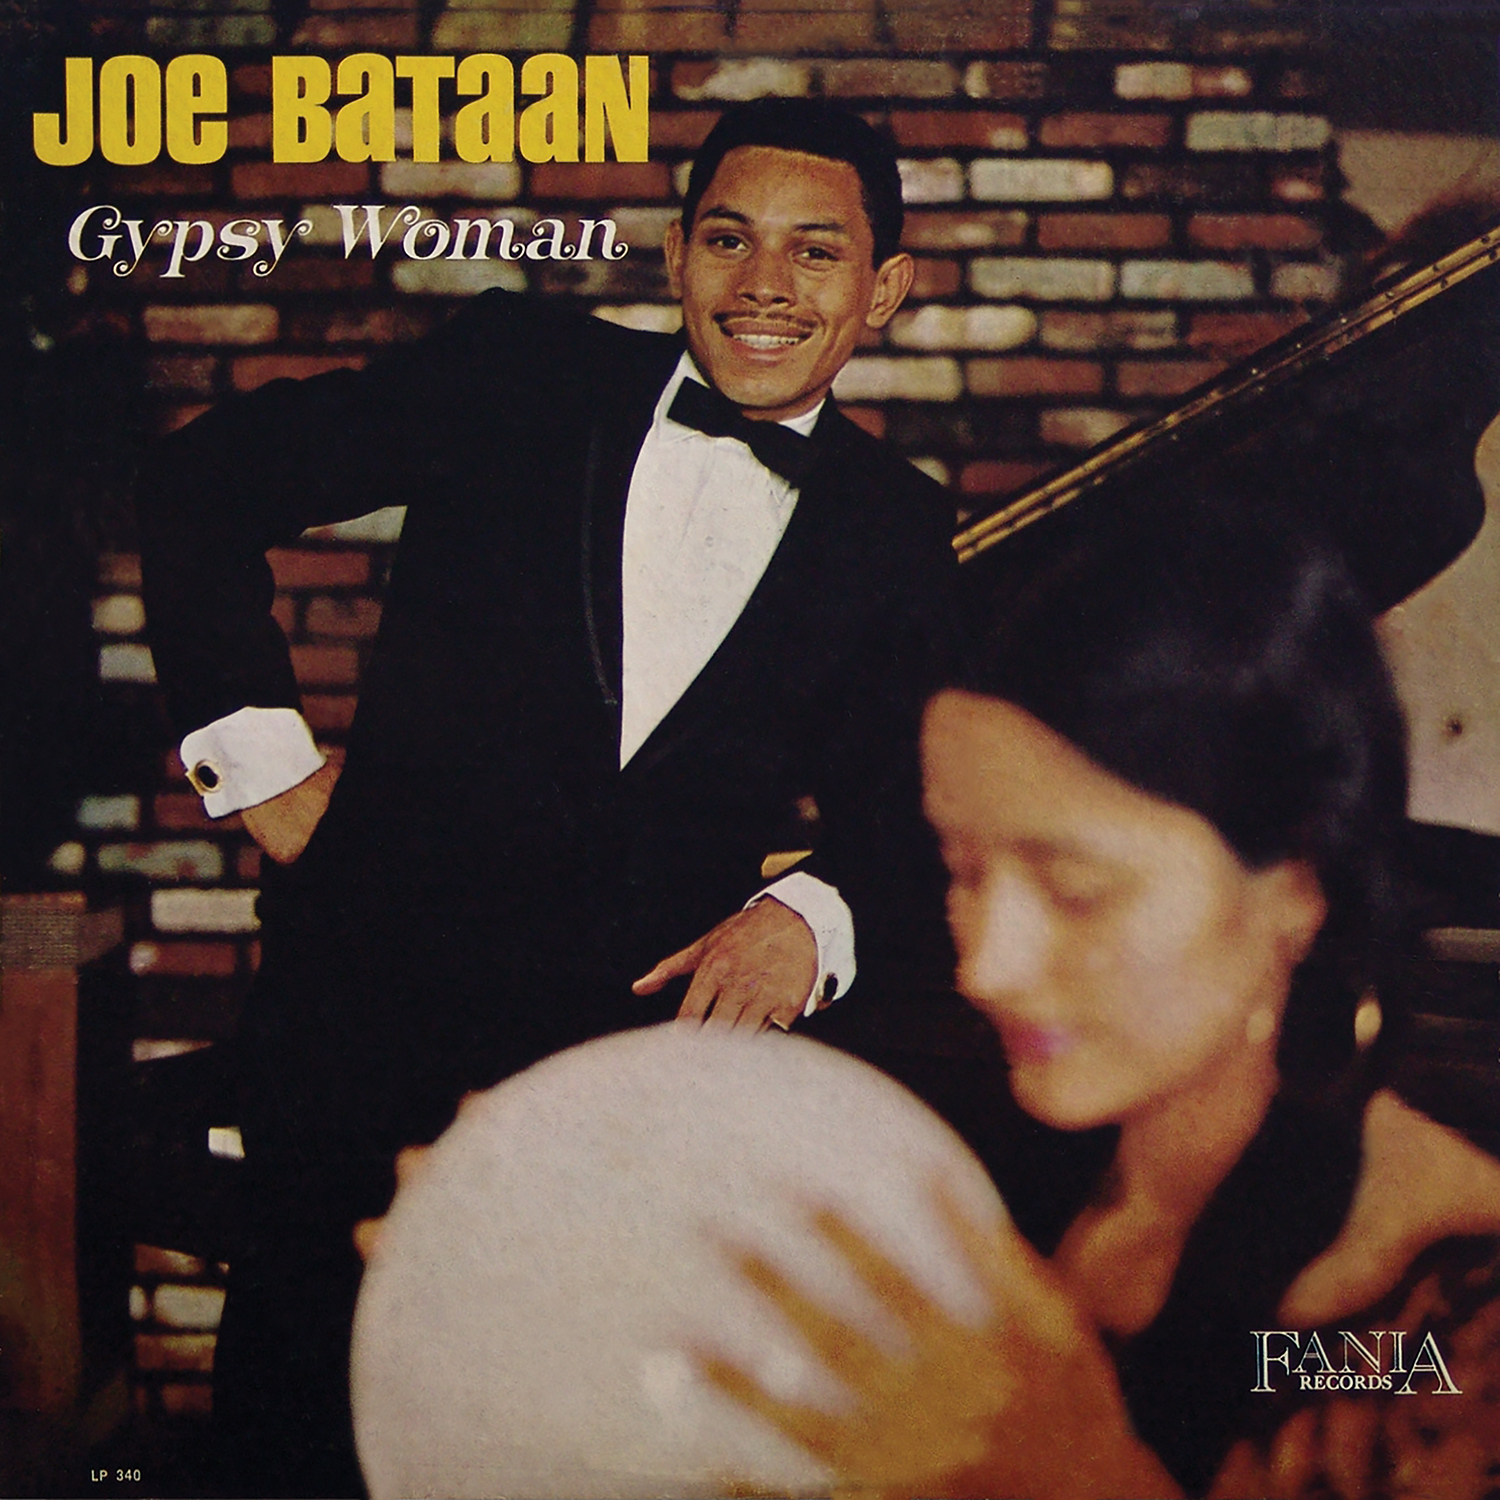 Joe Bataan - Mujer gitana